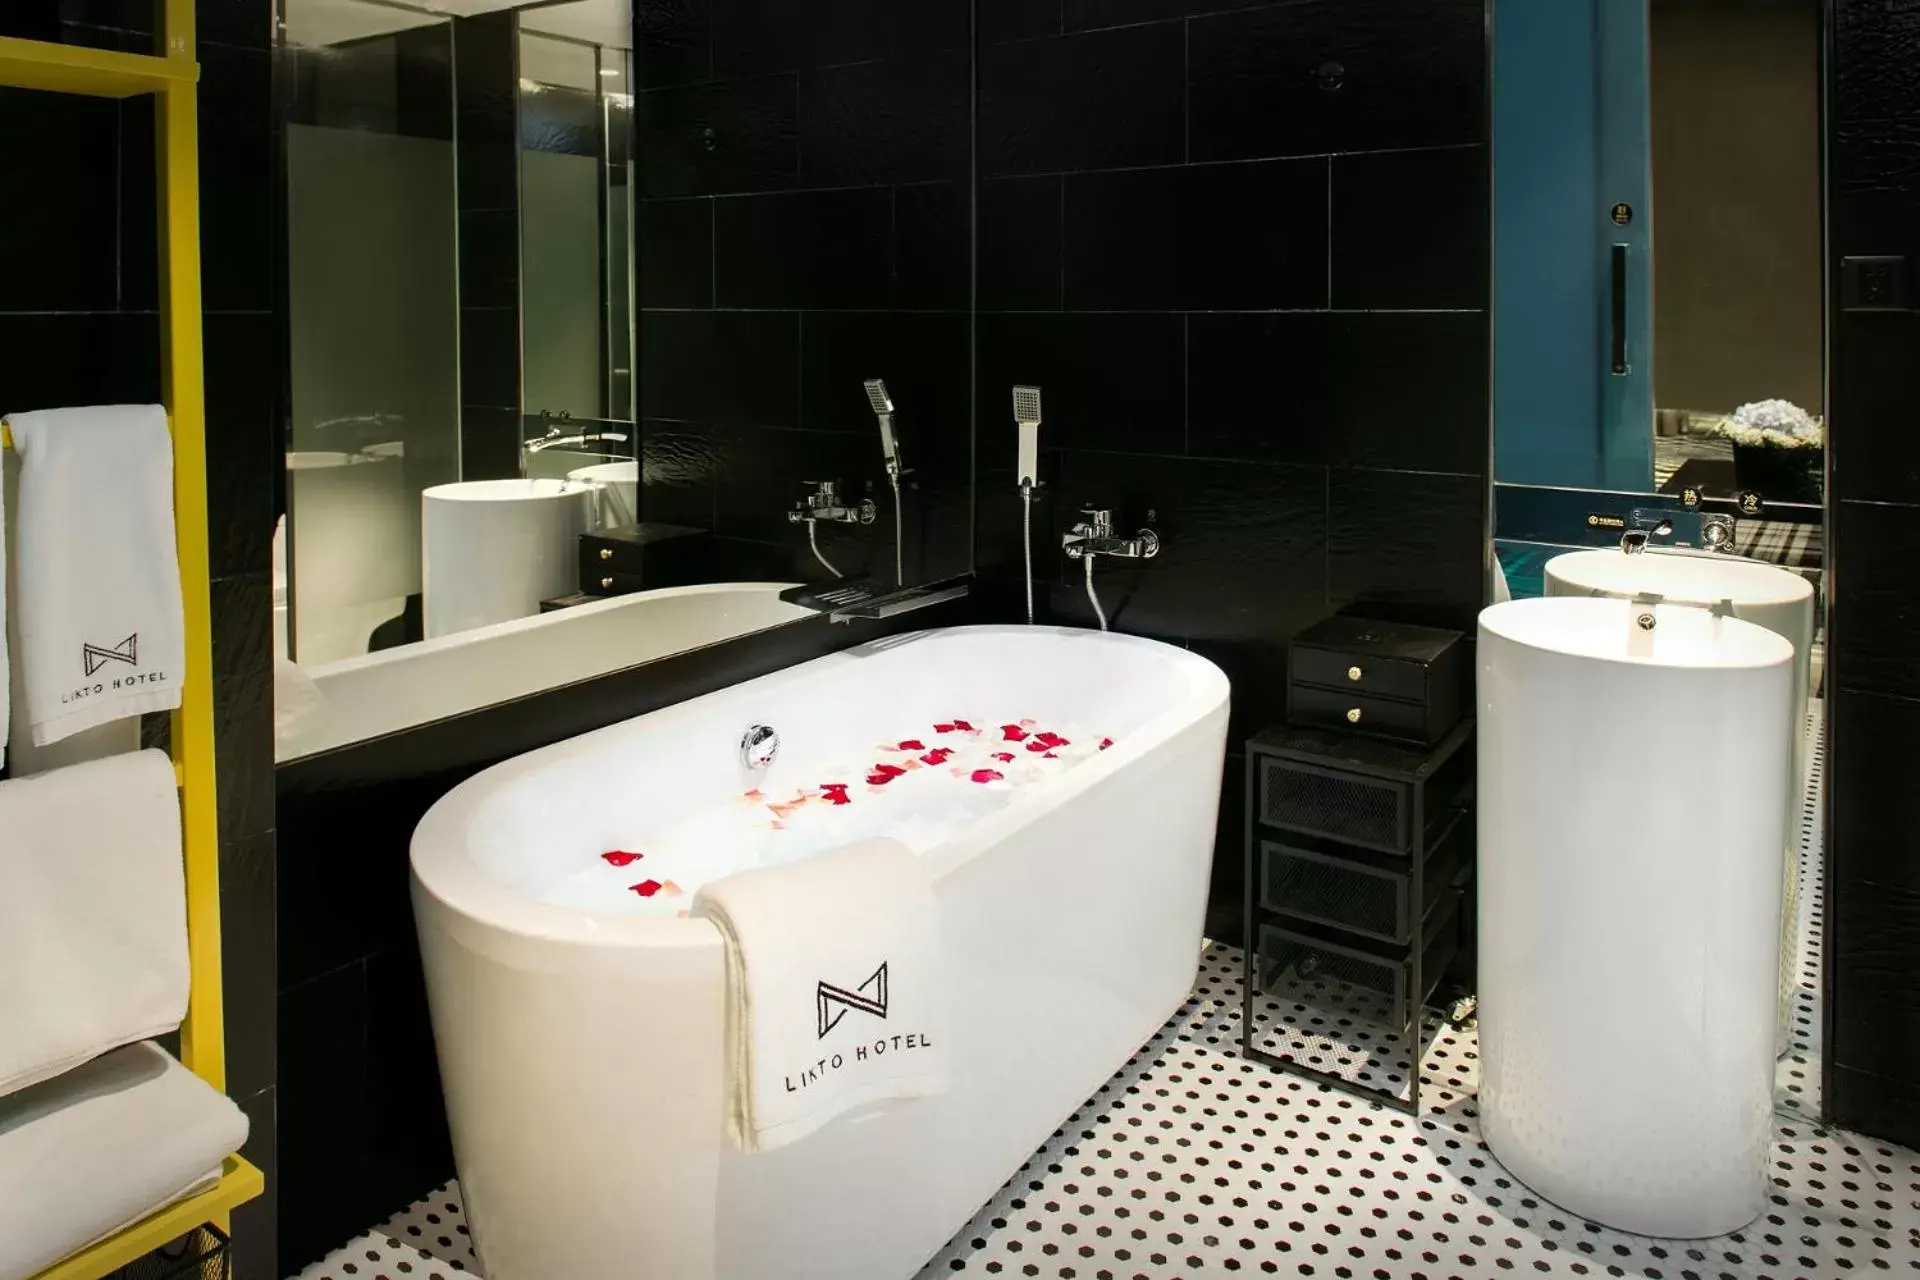 Bath, Bathroom in Likto Hotel-Free Shuttle Bus to Canton Fair